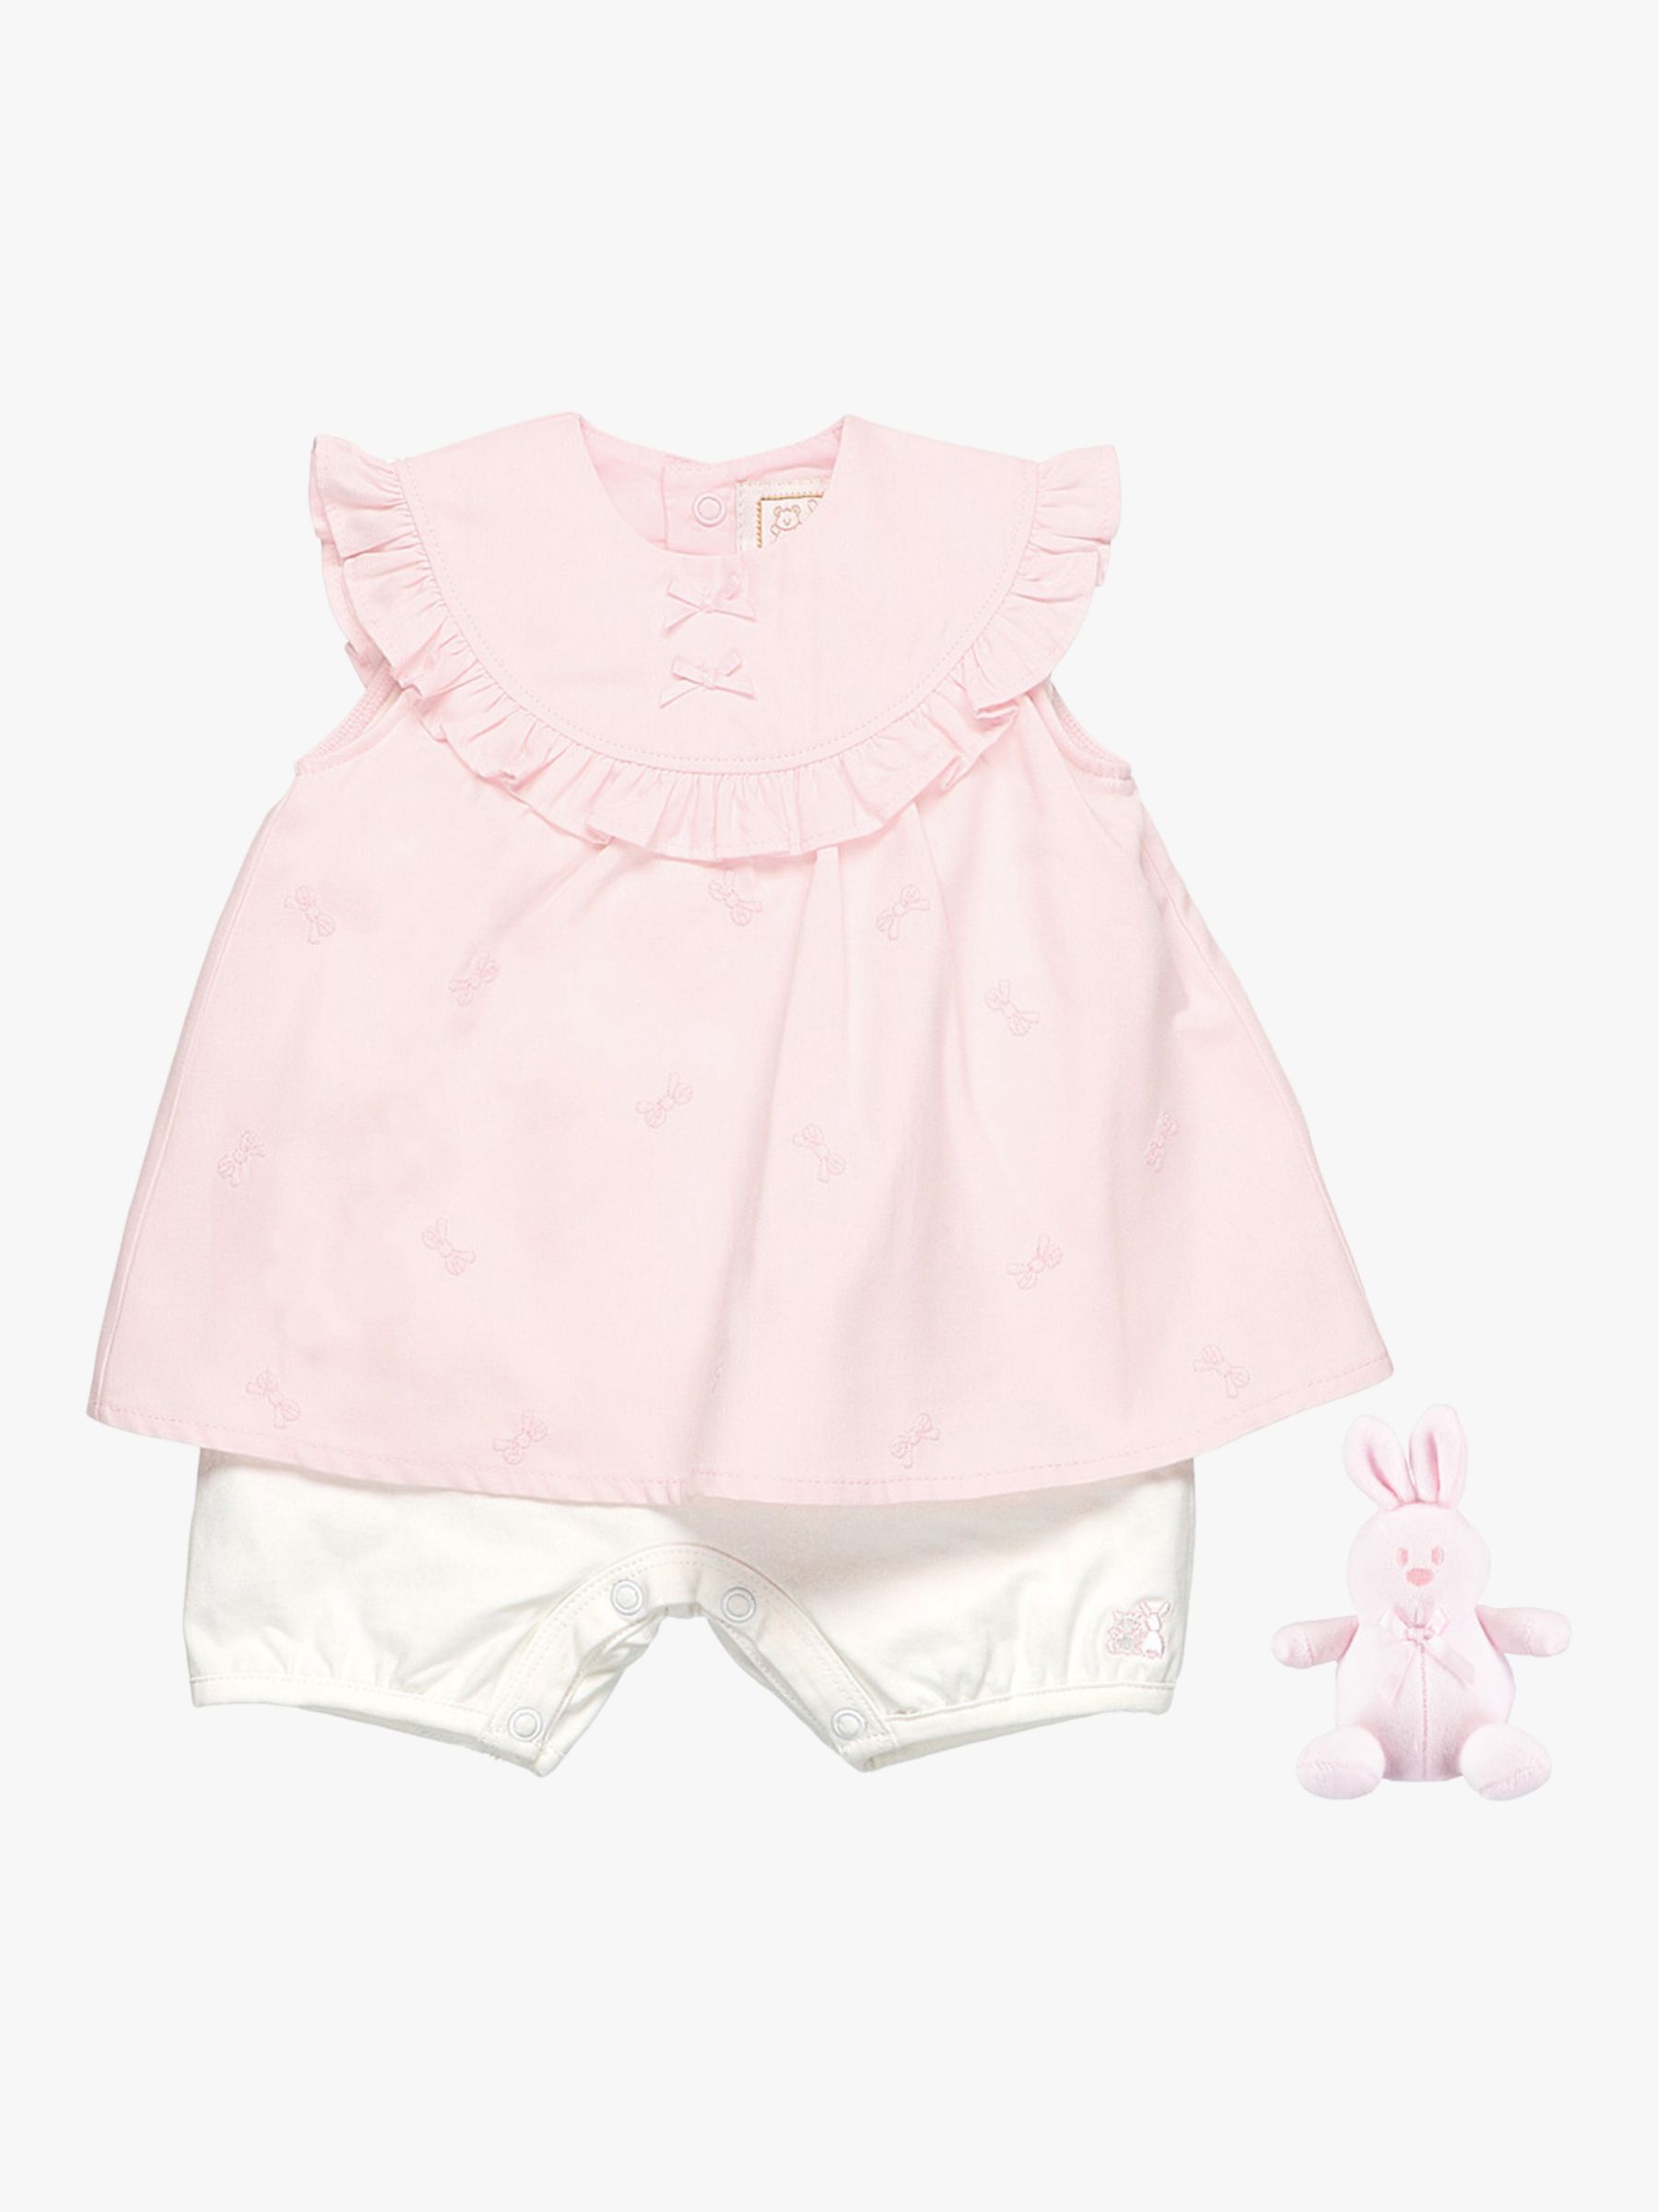 Emile et Rose Baby Phillipa Dress, Shorts and Teddy Bear Set, Light Pink, Newborn